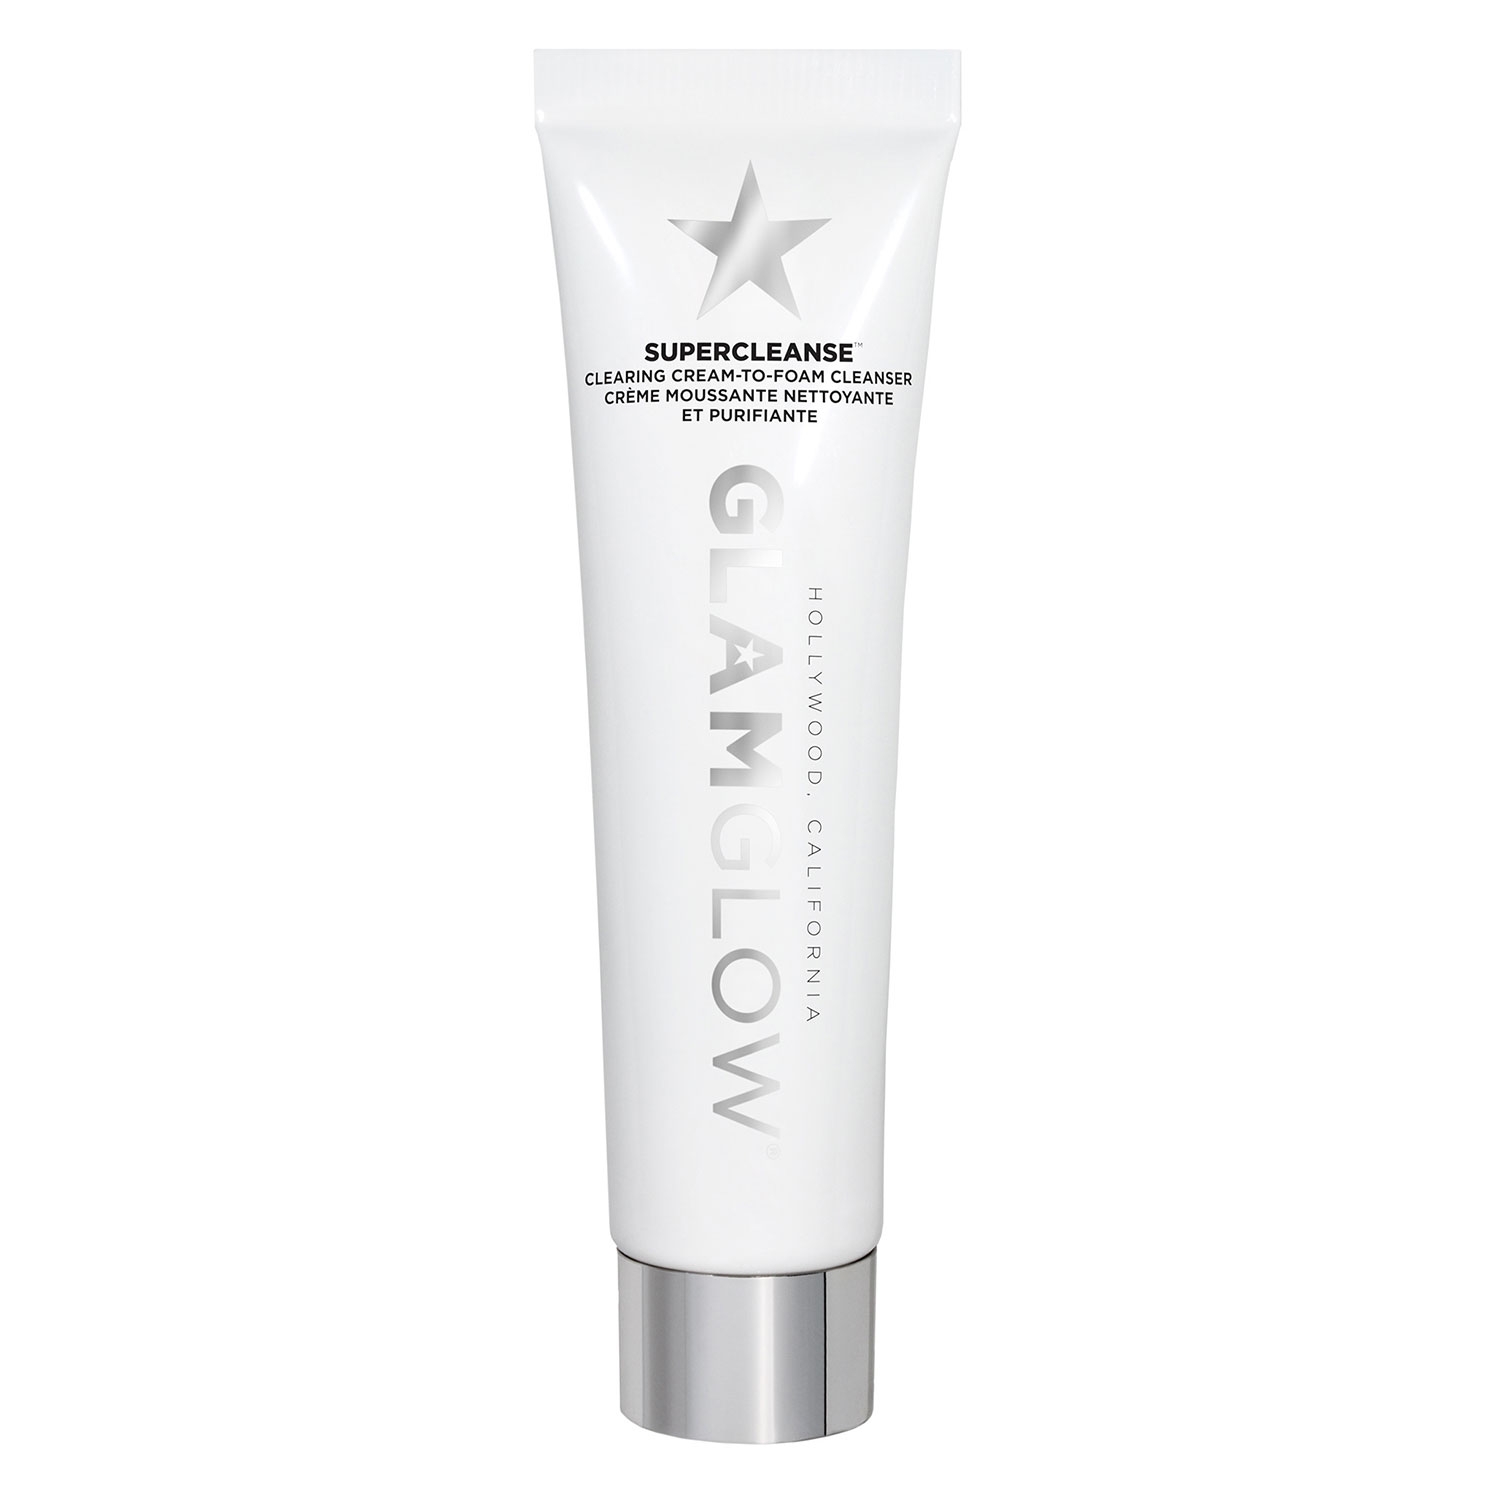 Image du produit de GlamGlow Skincare - SUPERCLEANSE Clearing Cream-to-Foam Cleanser